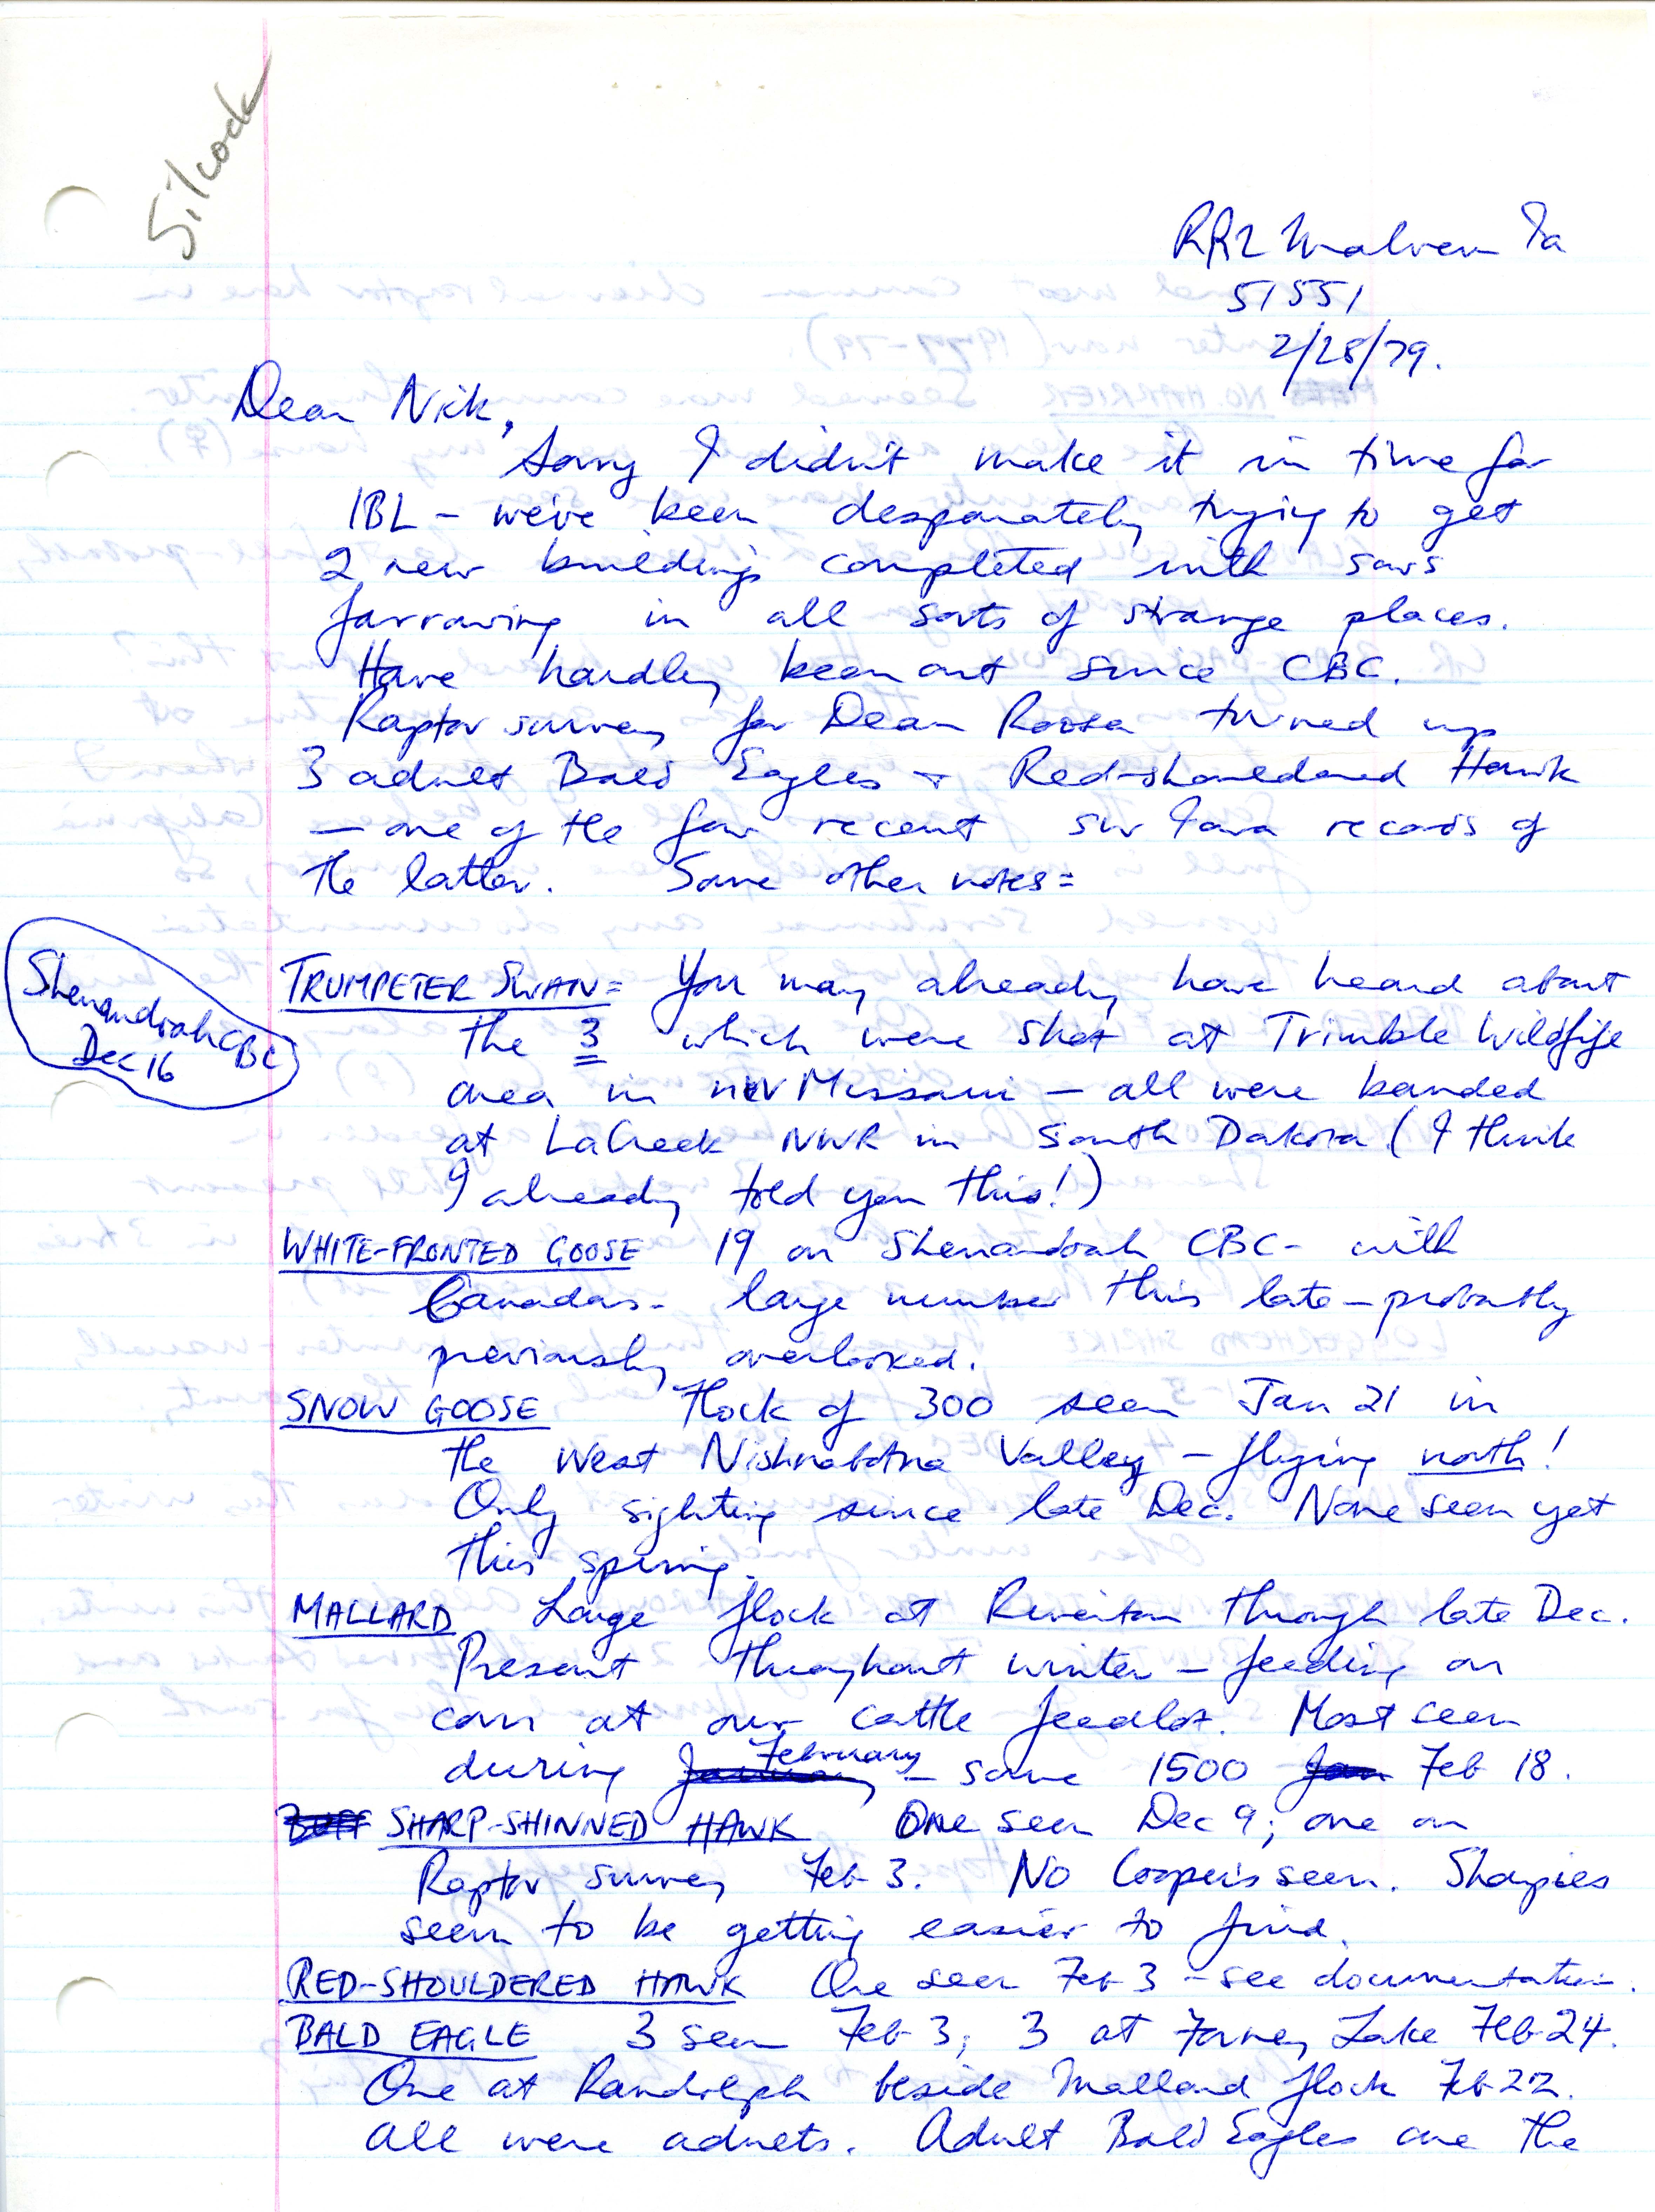 W. Ross Silcock letter to Nicholas S. Halmi regarding winter bird sightings, February 28, 1979